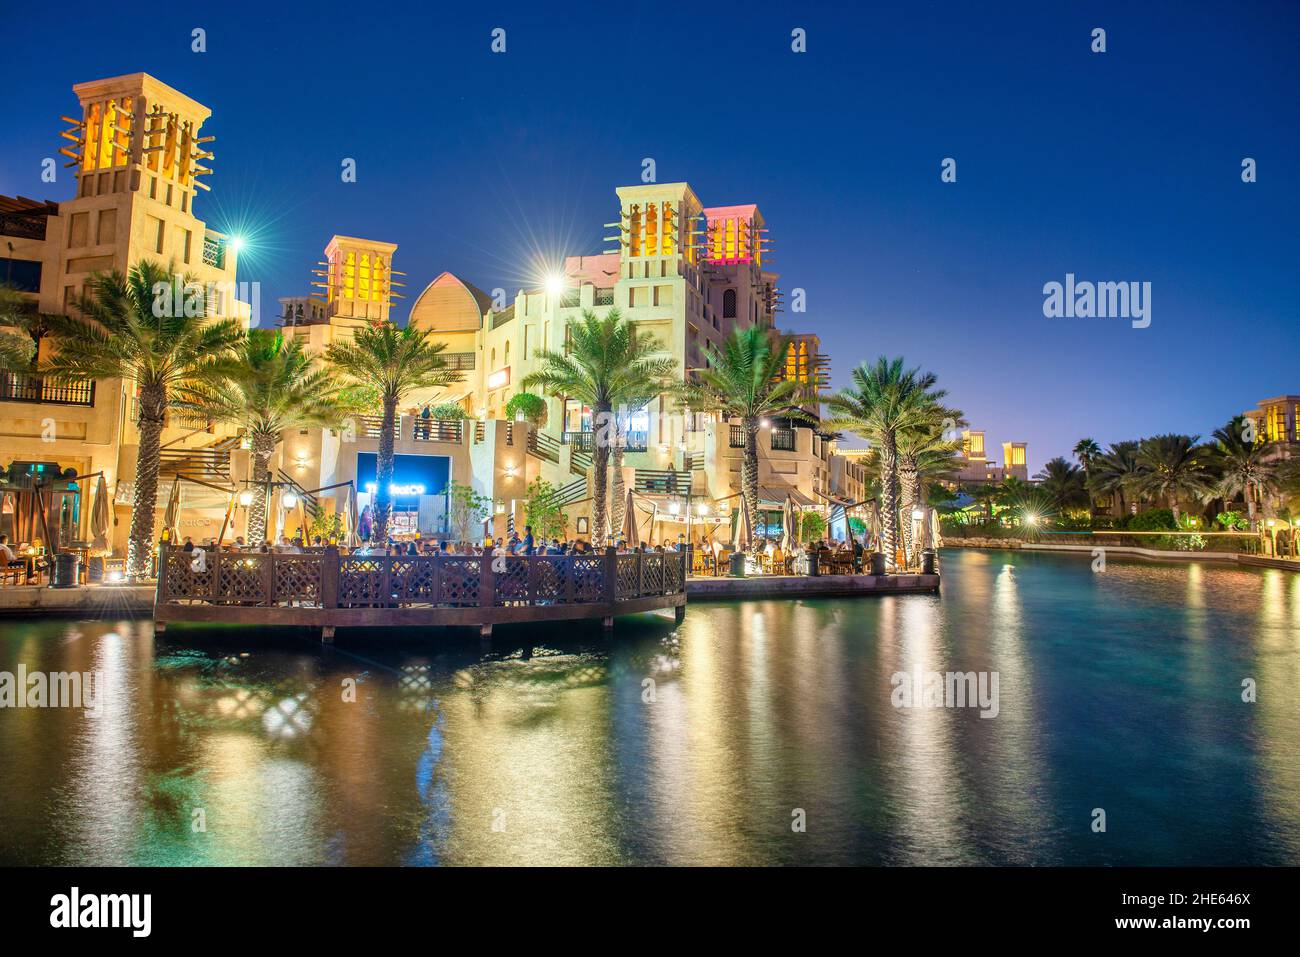 DUBAI, UAE - DECEMBER 9, 2016: Madinat Jumeirah buildings and tourists along the canals at night Stock Photo